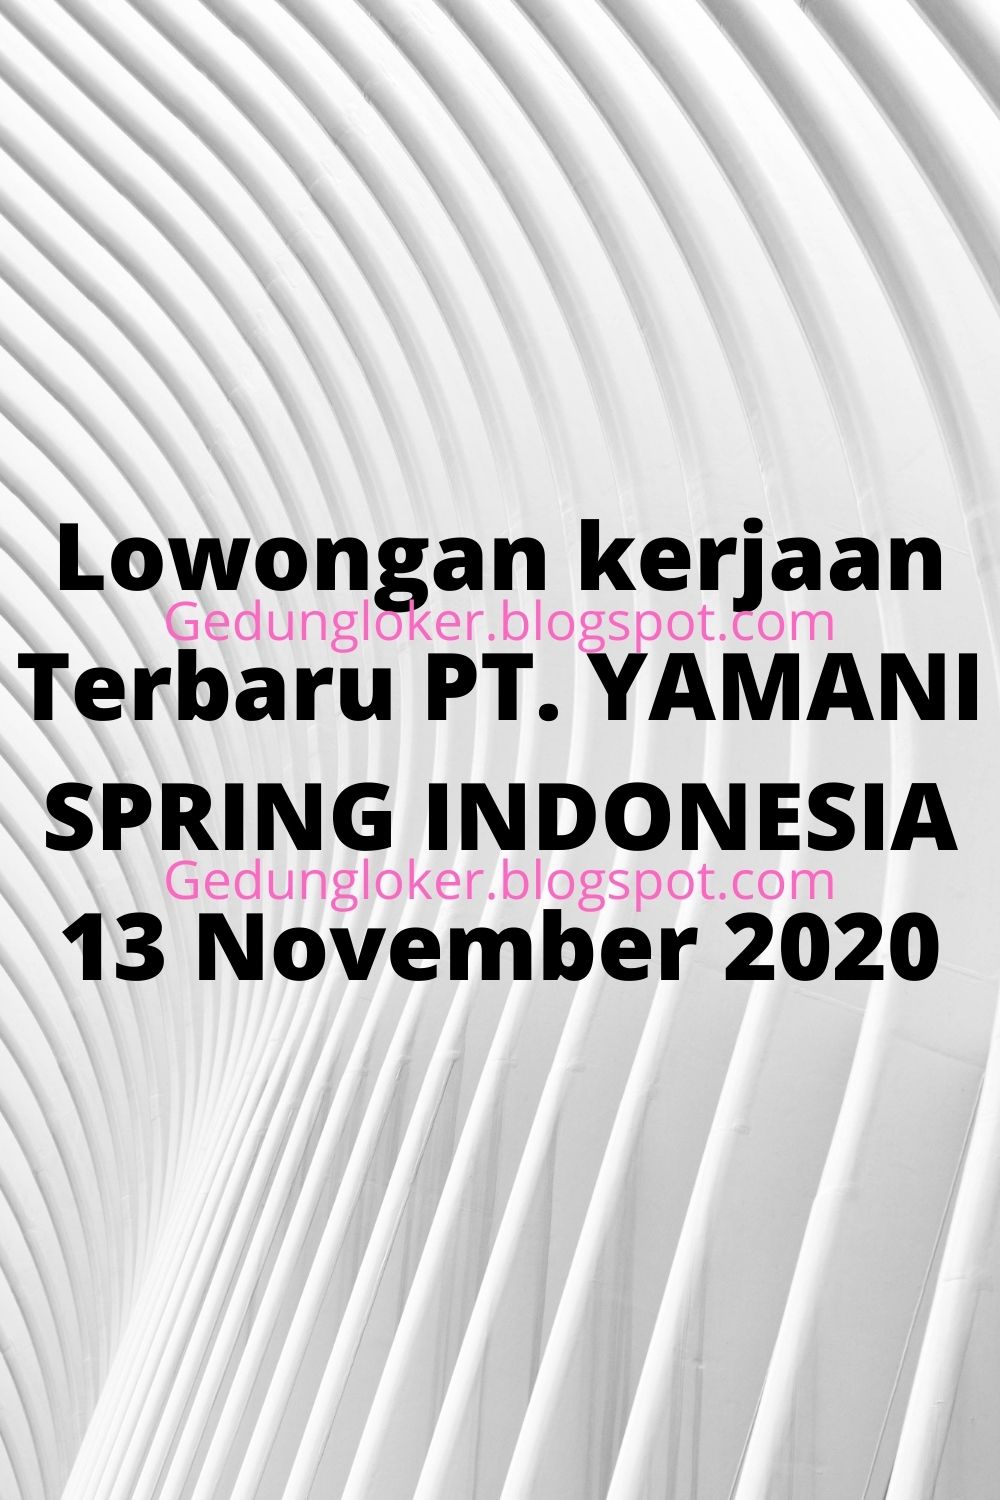 Lowongan kerjaan Terbaru PT. YAMANI SPRING INDONESIA 13 November 2020